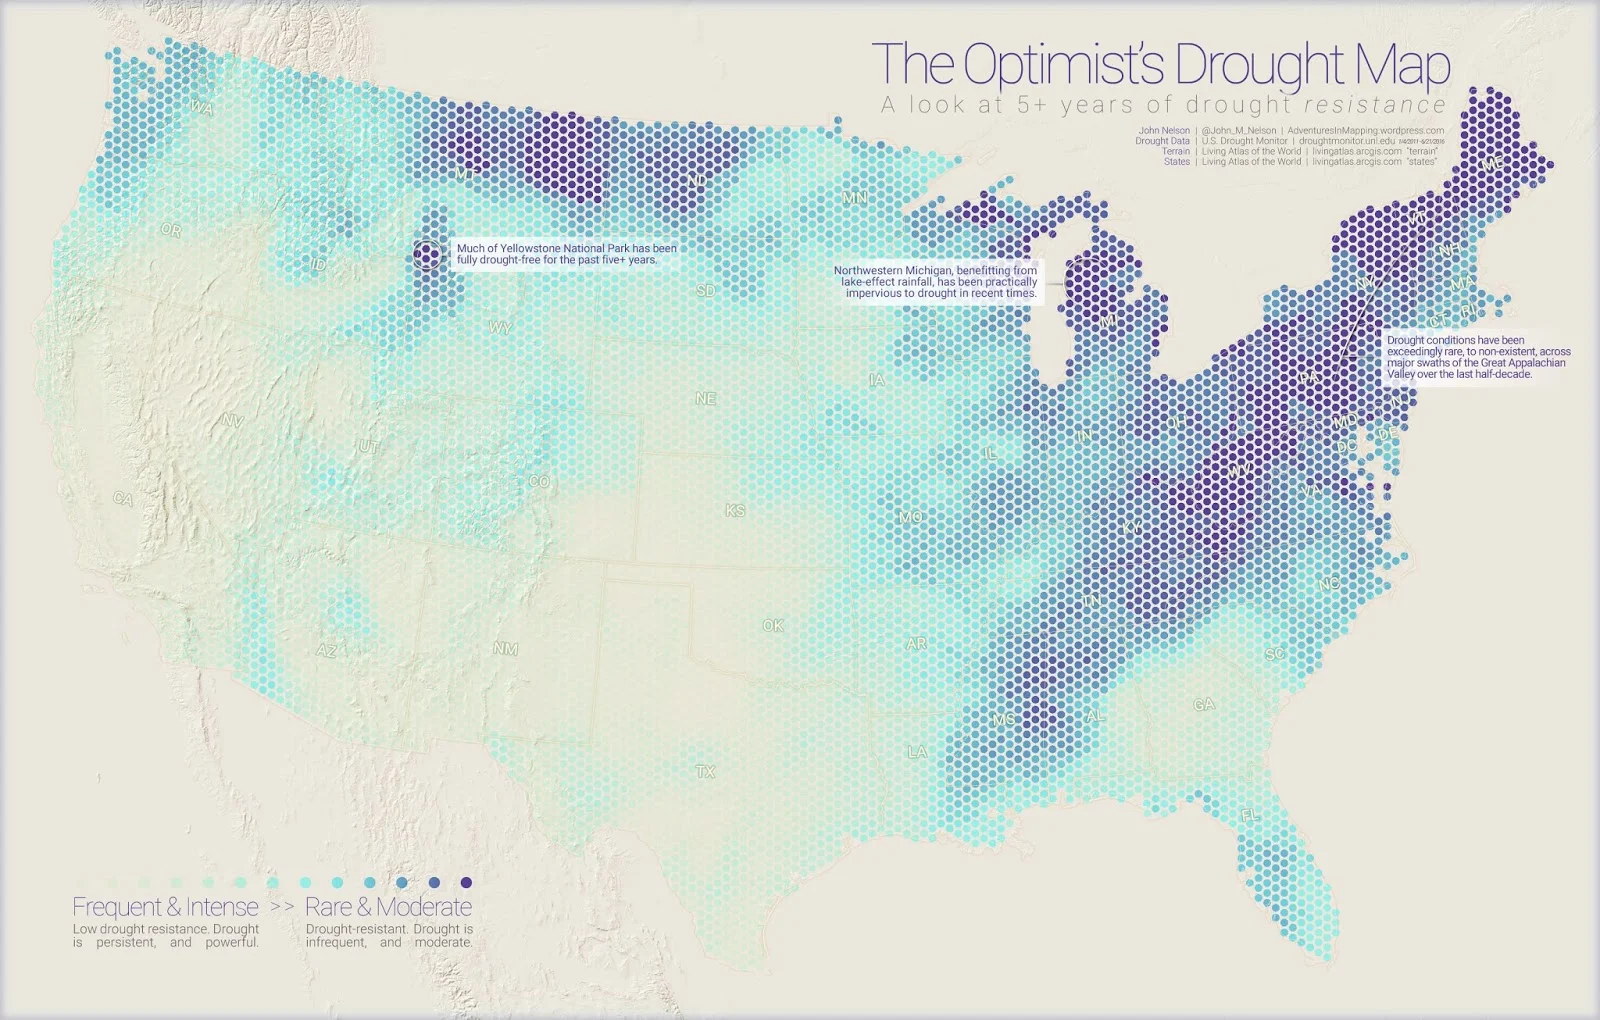 Optemist's drought map